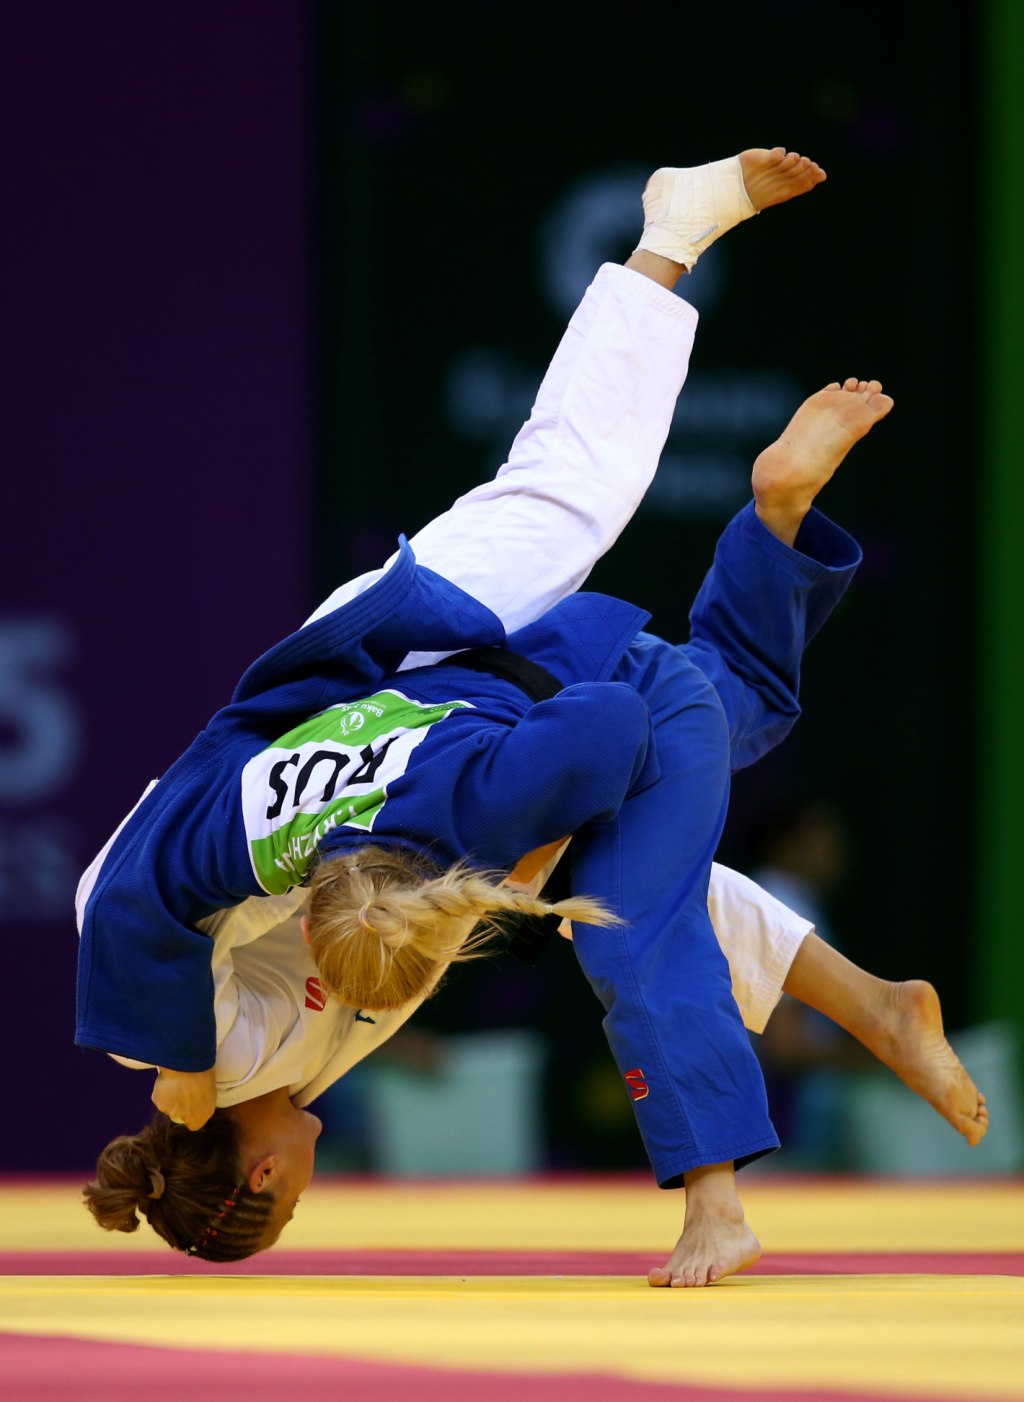 Дзюдо: Judo Day 16: Baku 2015 — 1st European Games